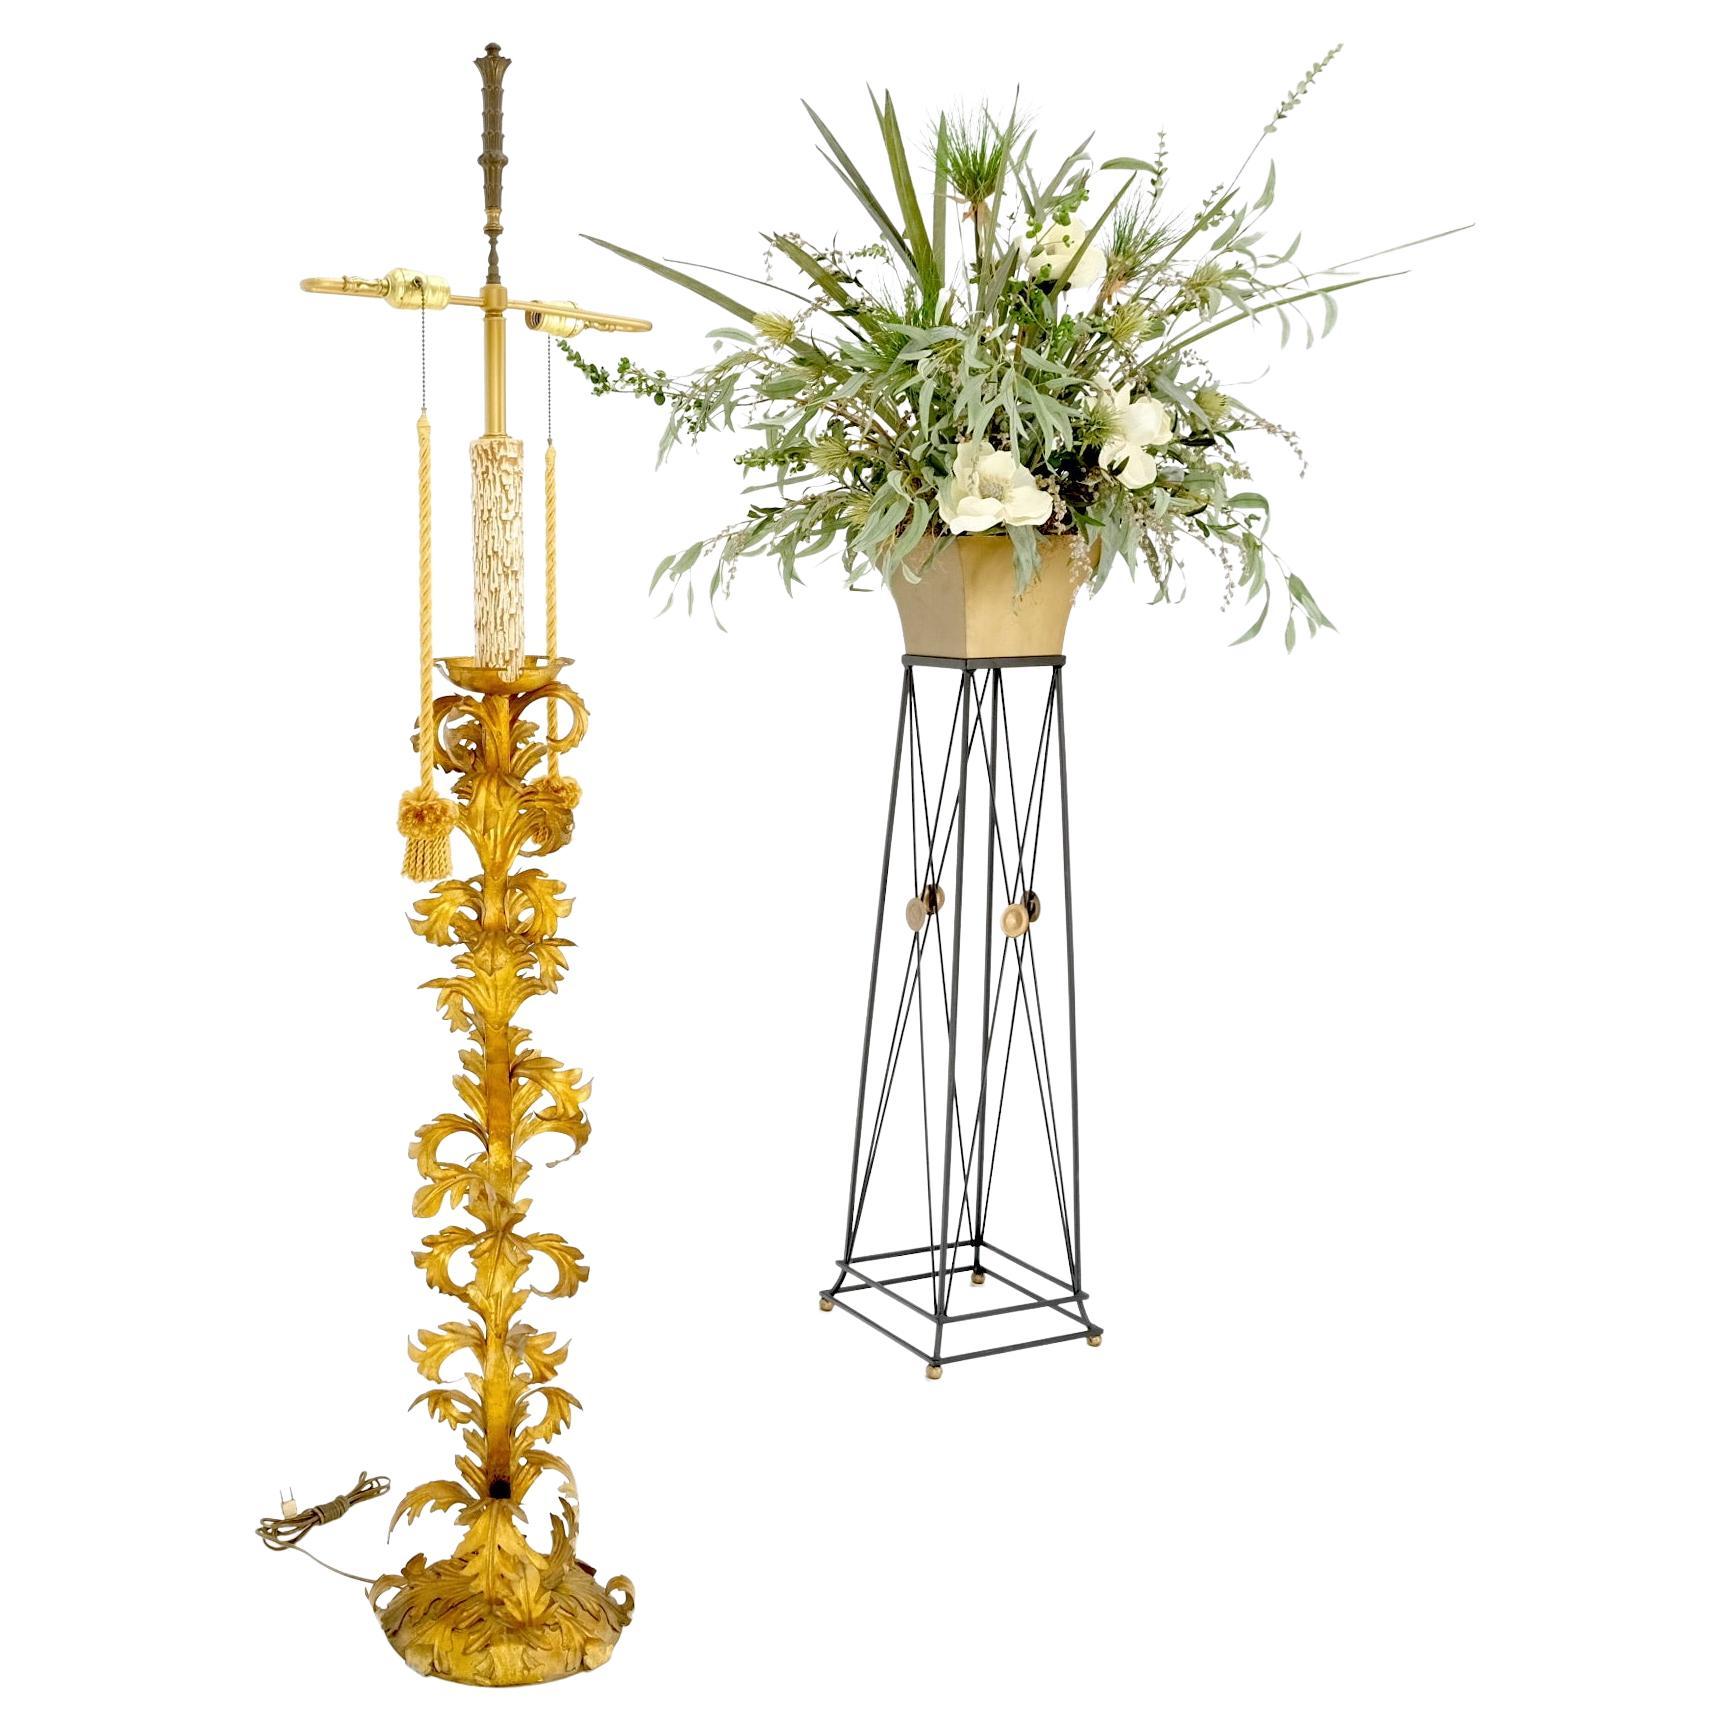 Dekorative italienische 6' hohe blattgoldene Metall-Stehlampe MINT!